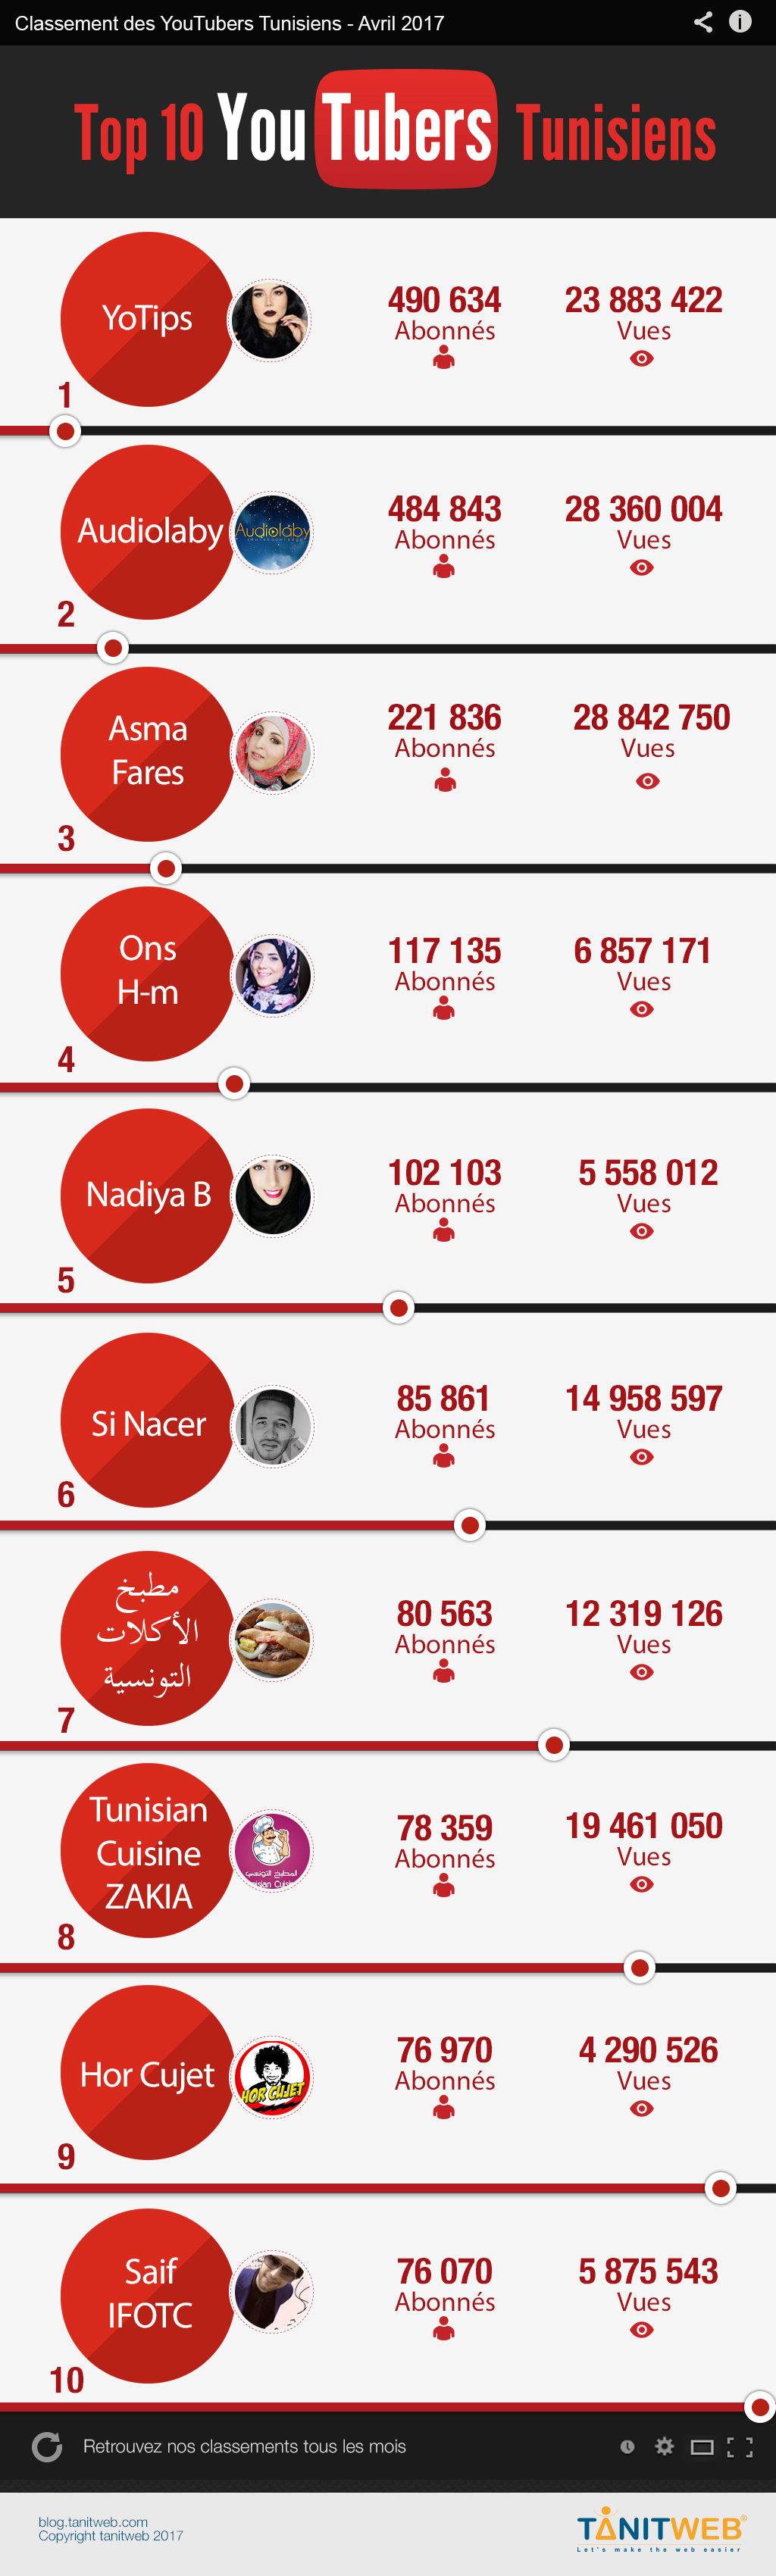 Meilleurs YouTubers Tunisiens